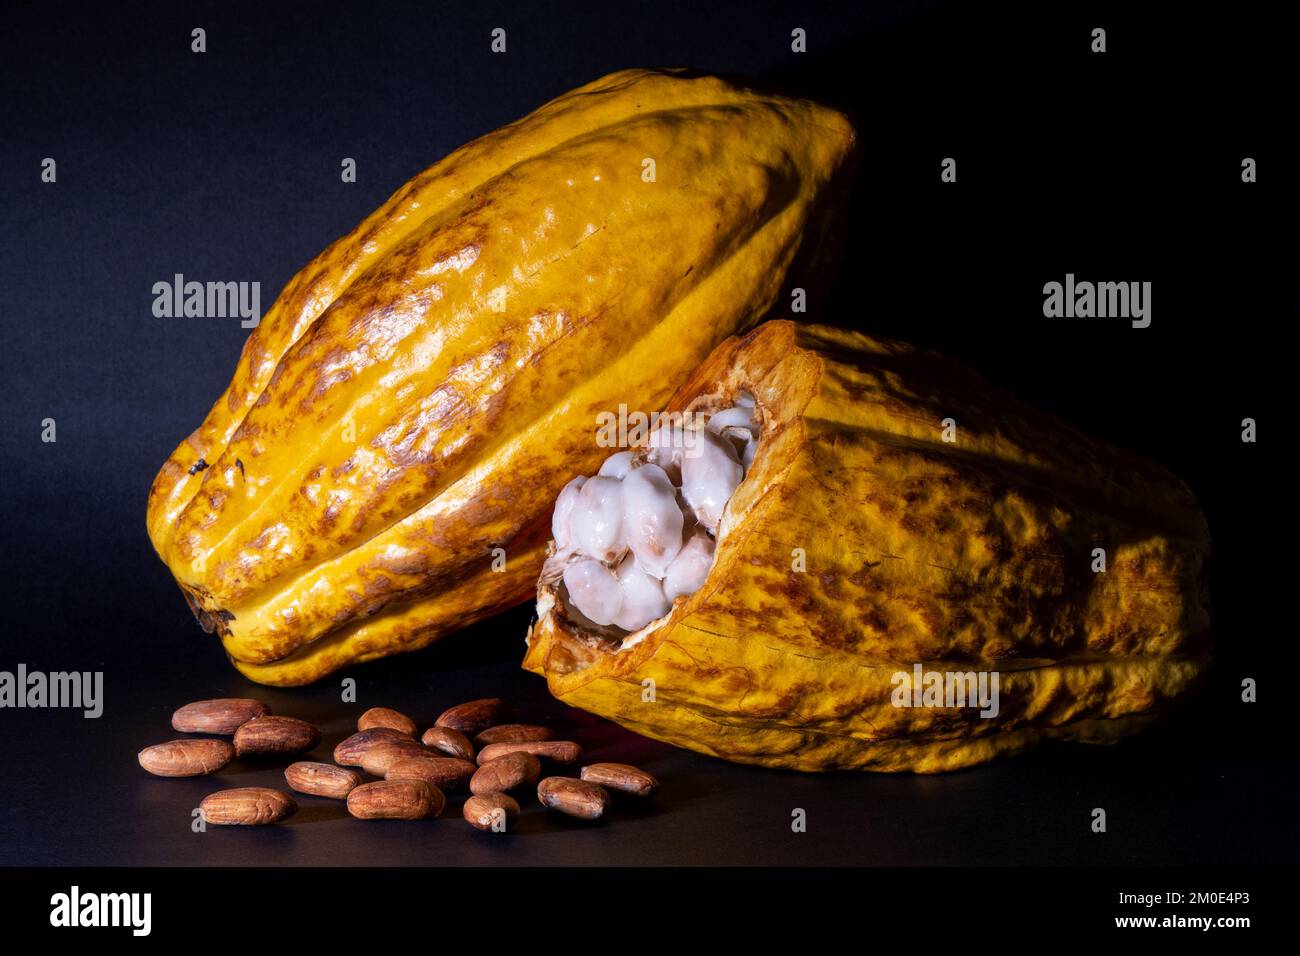 Aroma fine Arriba cacao nacional (Theobroma cacao) frutta con polpa e fagioli di cacao arrosto, Ecuador, Sud America. Foto Stock